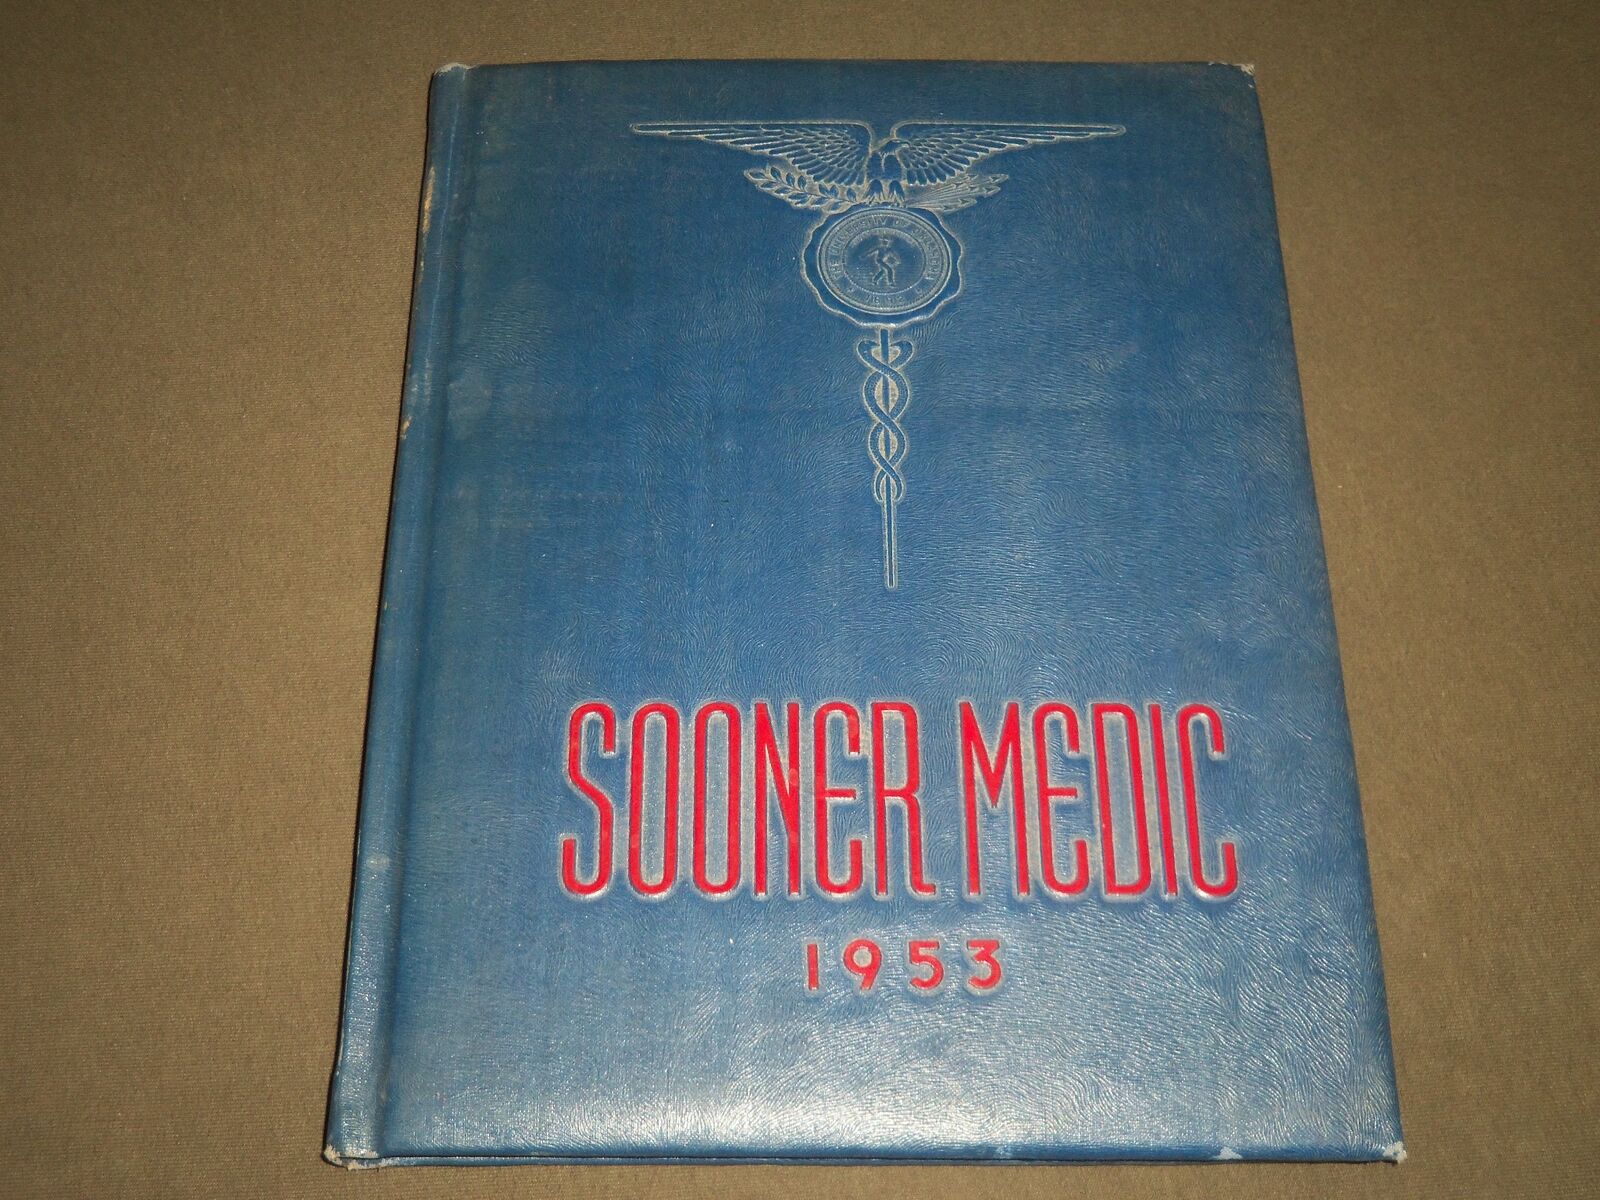 1953 SOONER MEDIC UNIVERSITY OF OKLAHOMA YEARBOOK - NICE PHOTOS - YB 1239